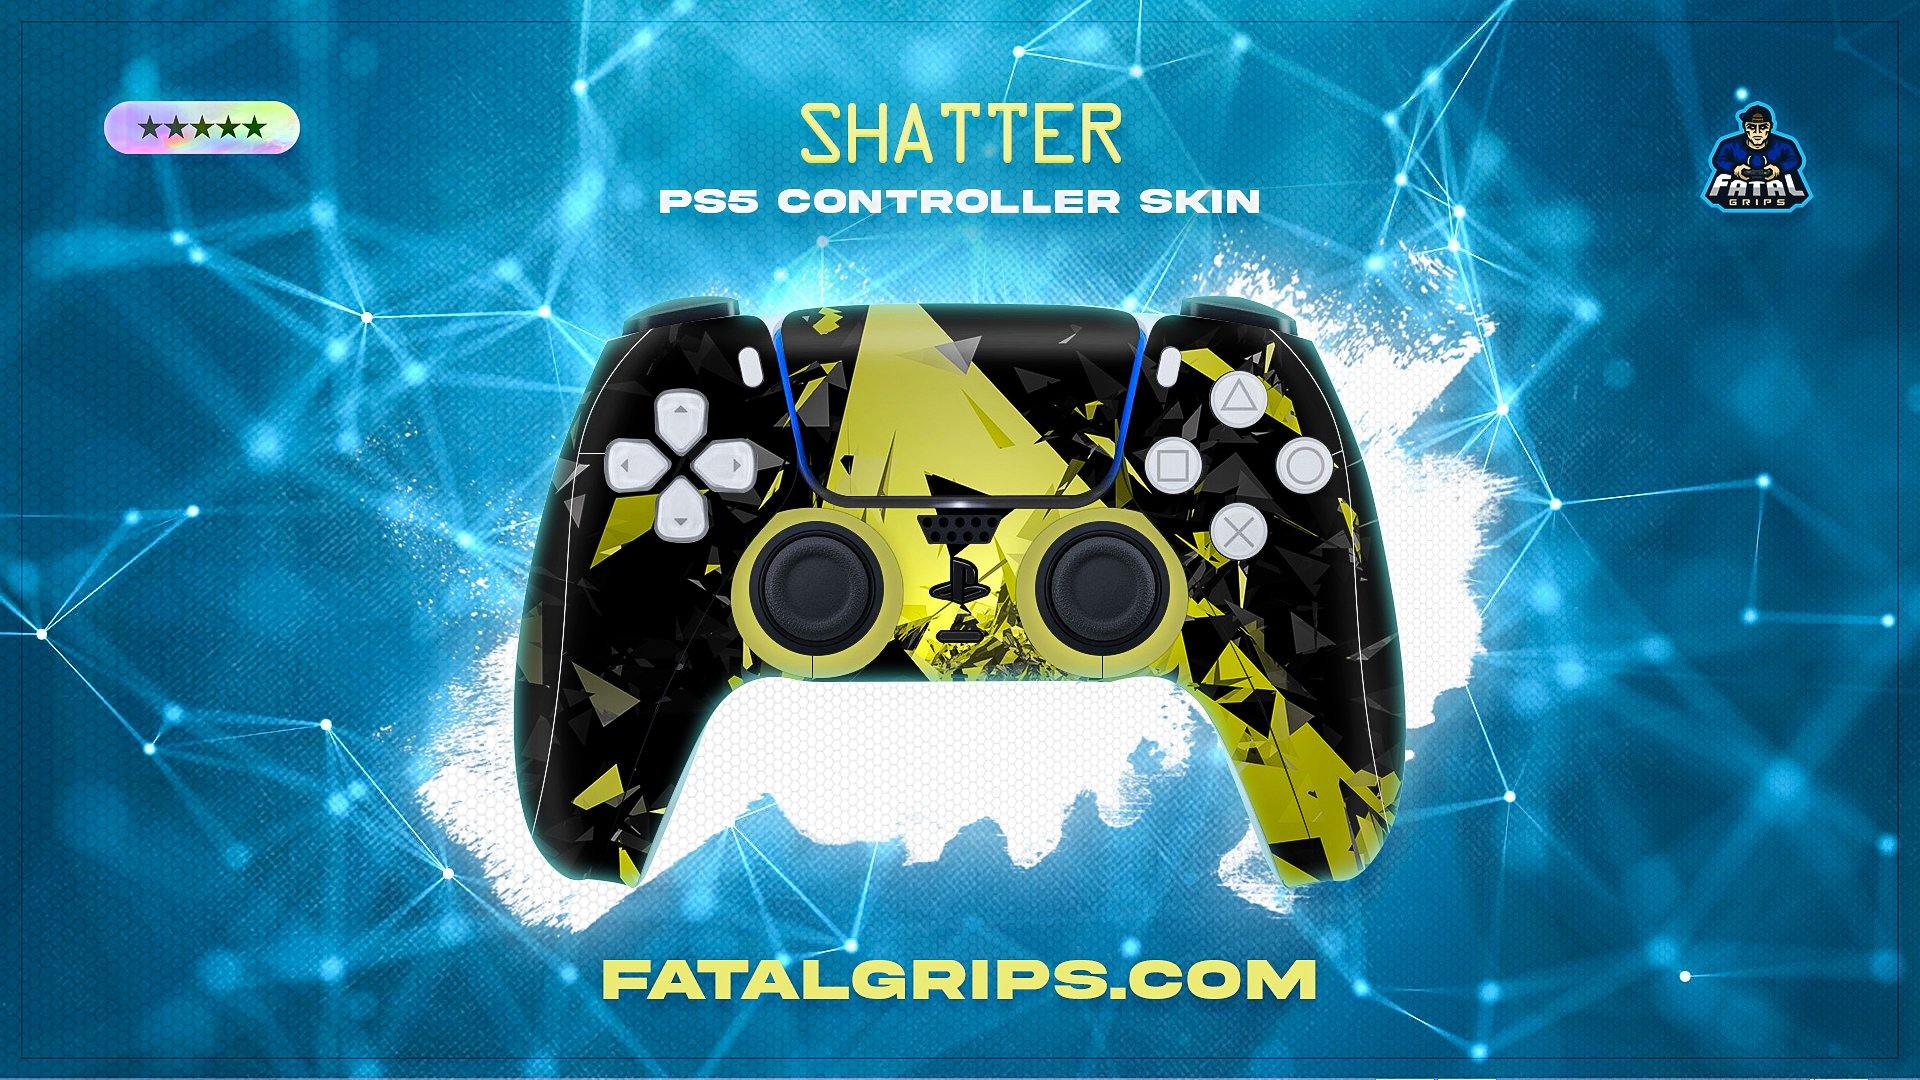 Shatter PS5 Controller Skin - Fatal Grips